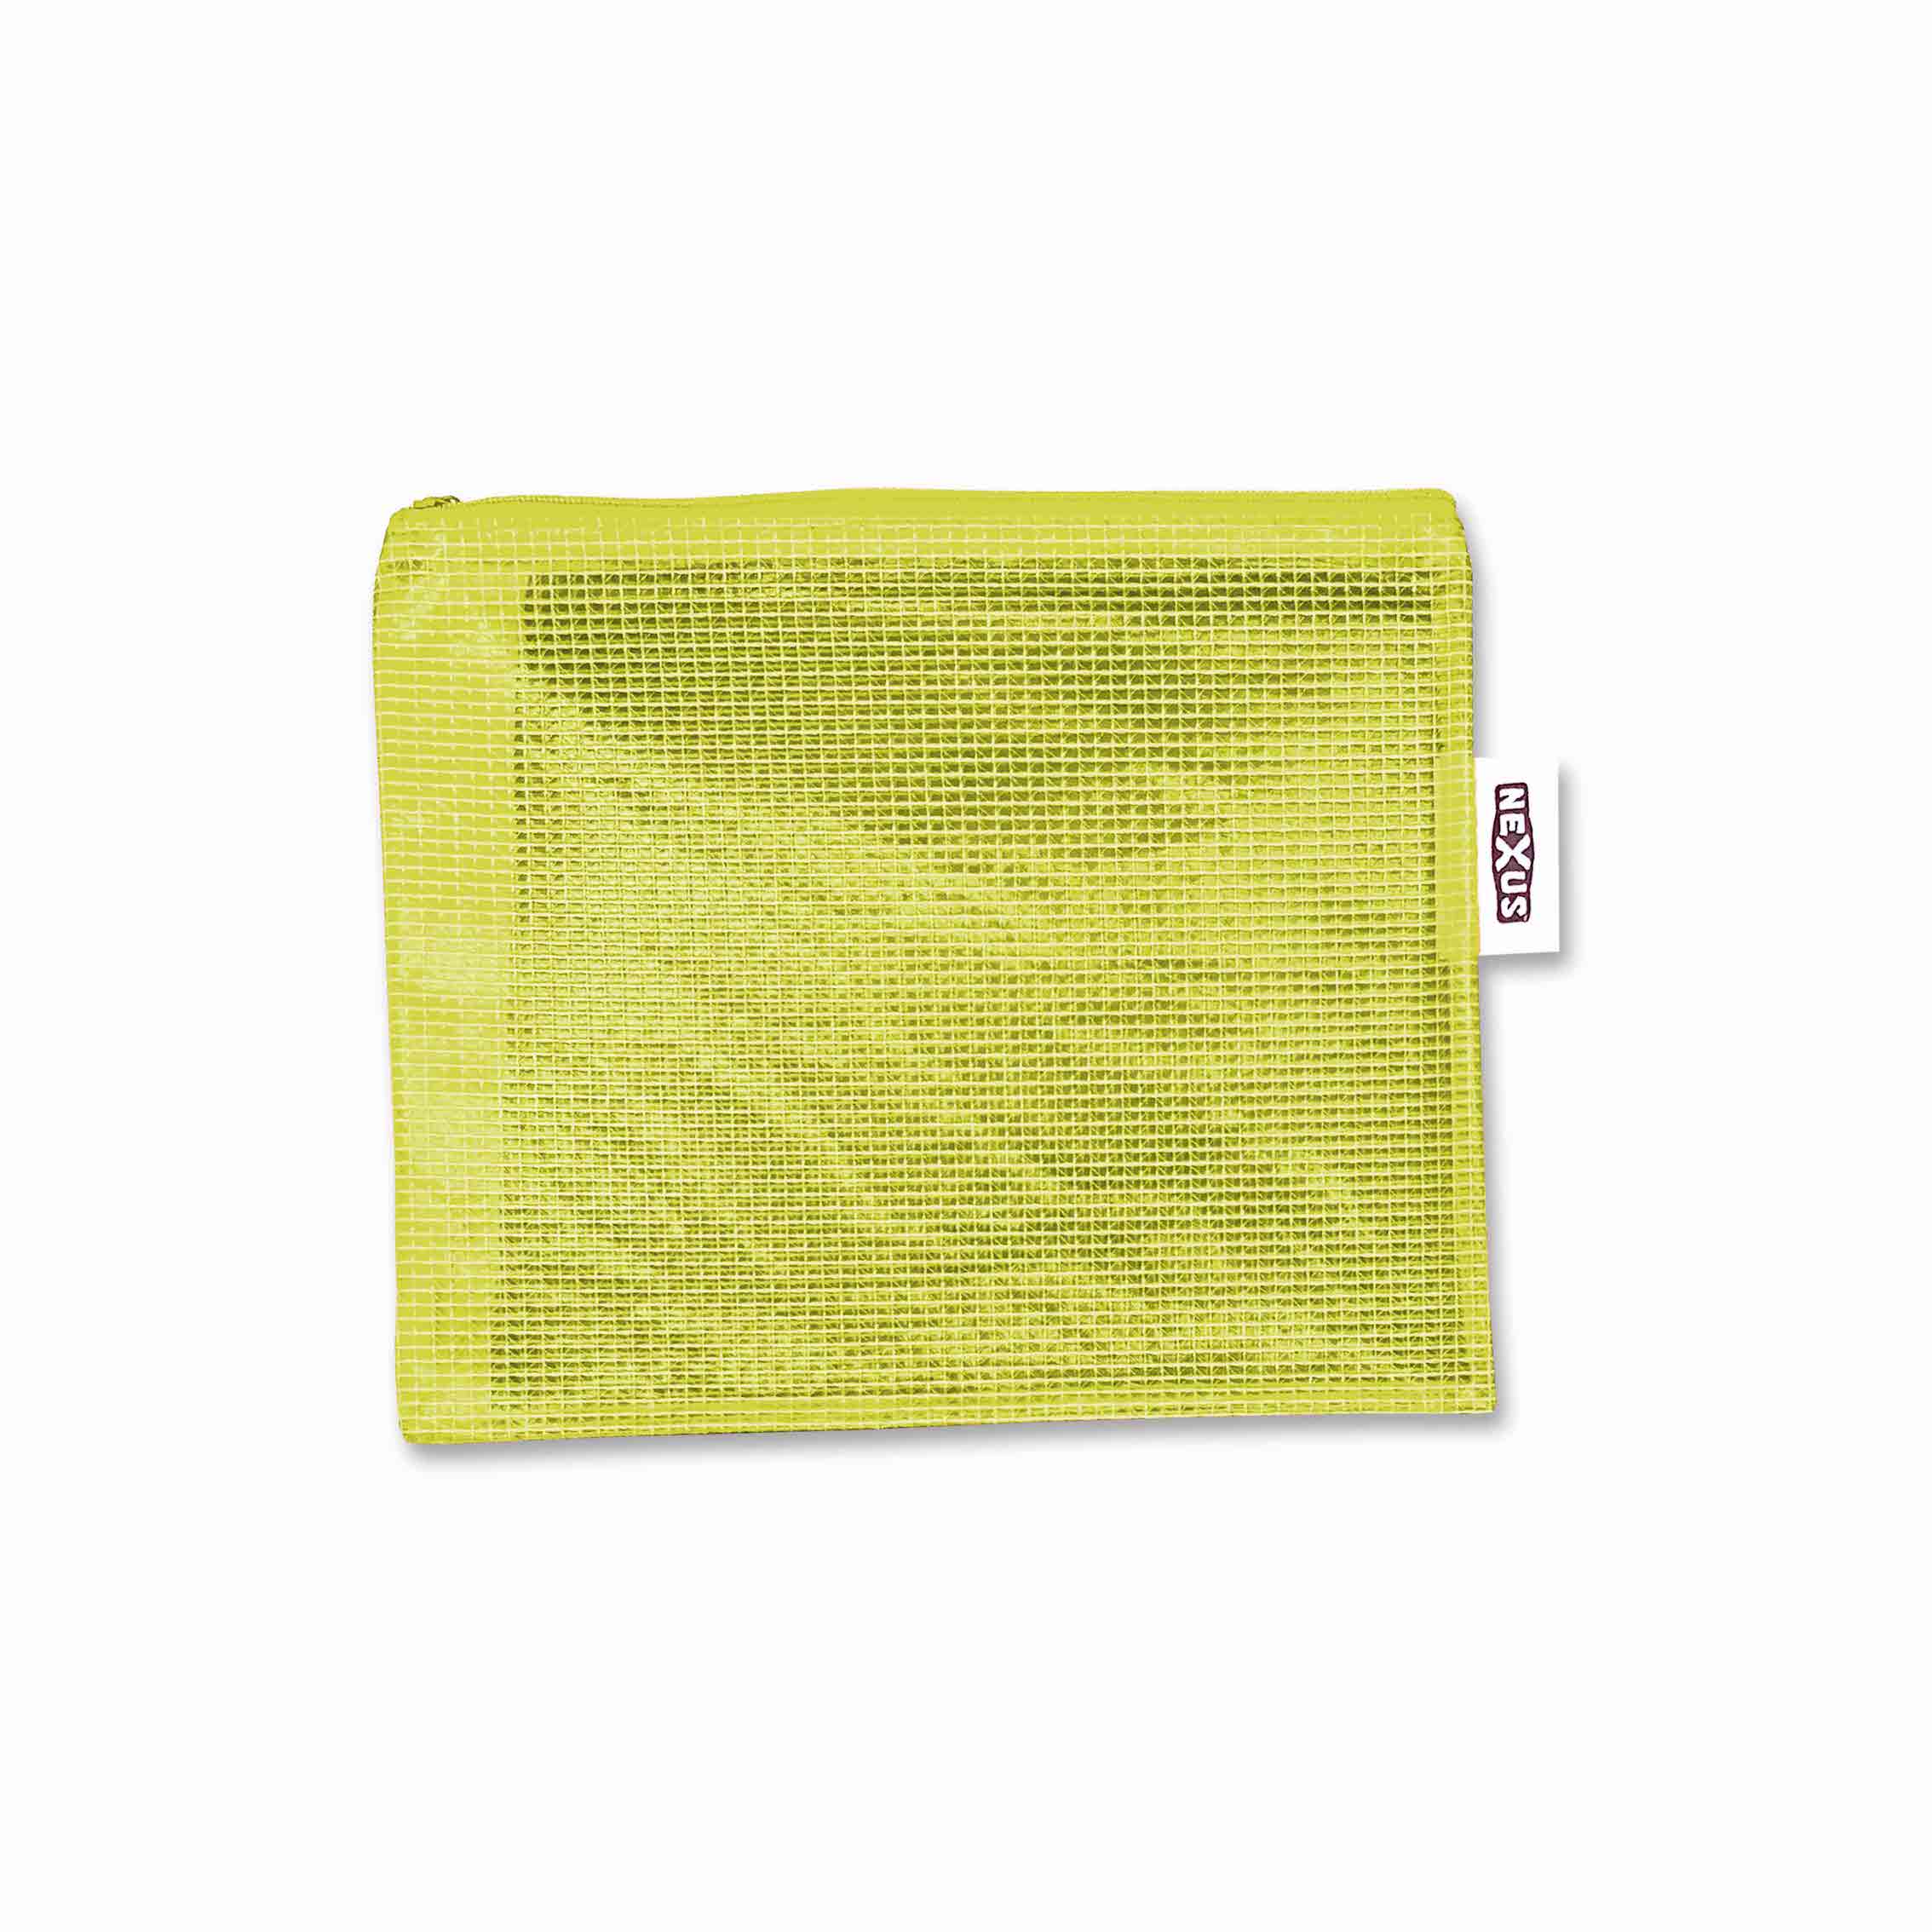 Essential Tough Kit Bag 18cm x 22 cm Yellow – 1 pc